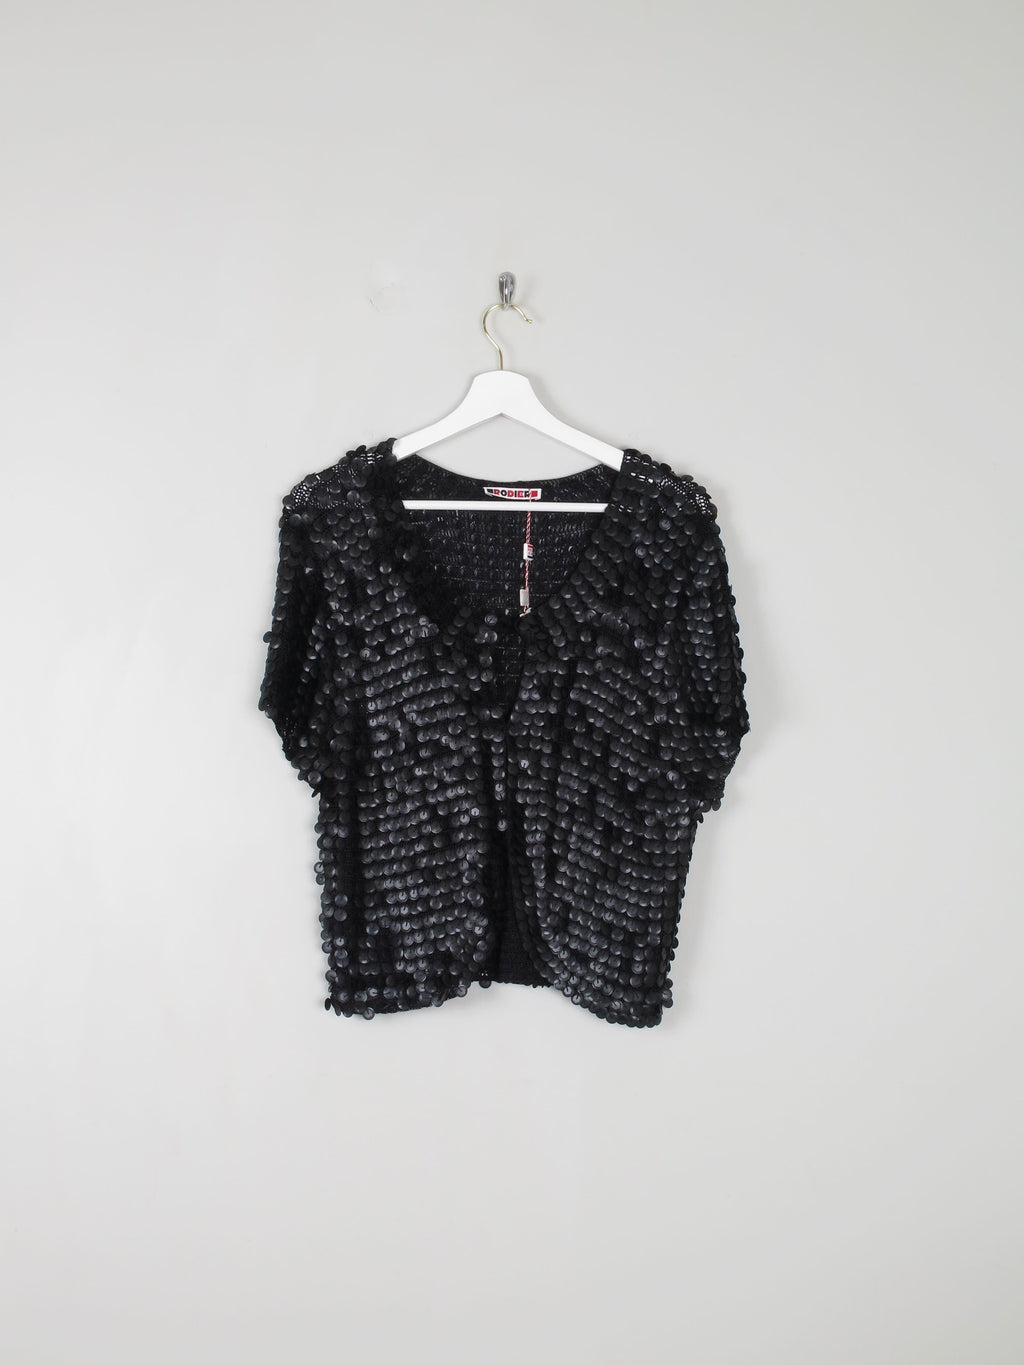 Women's Black Sequin & Crochet Bolero By Rodier Paris S/M Unworn - The Harlequin